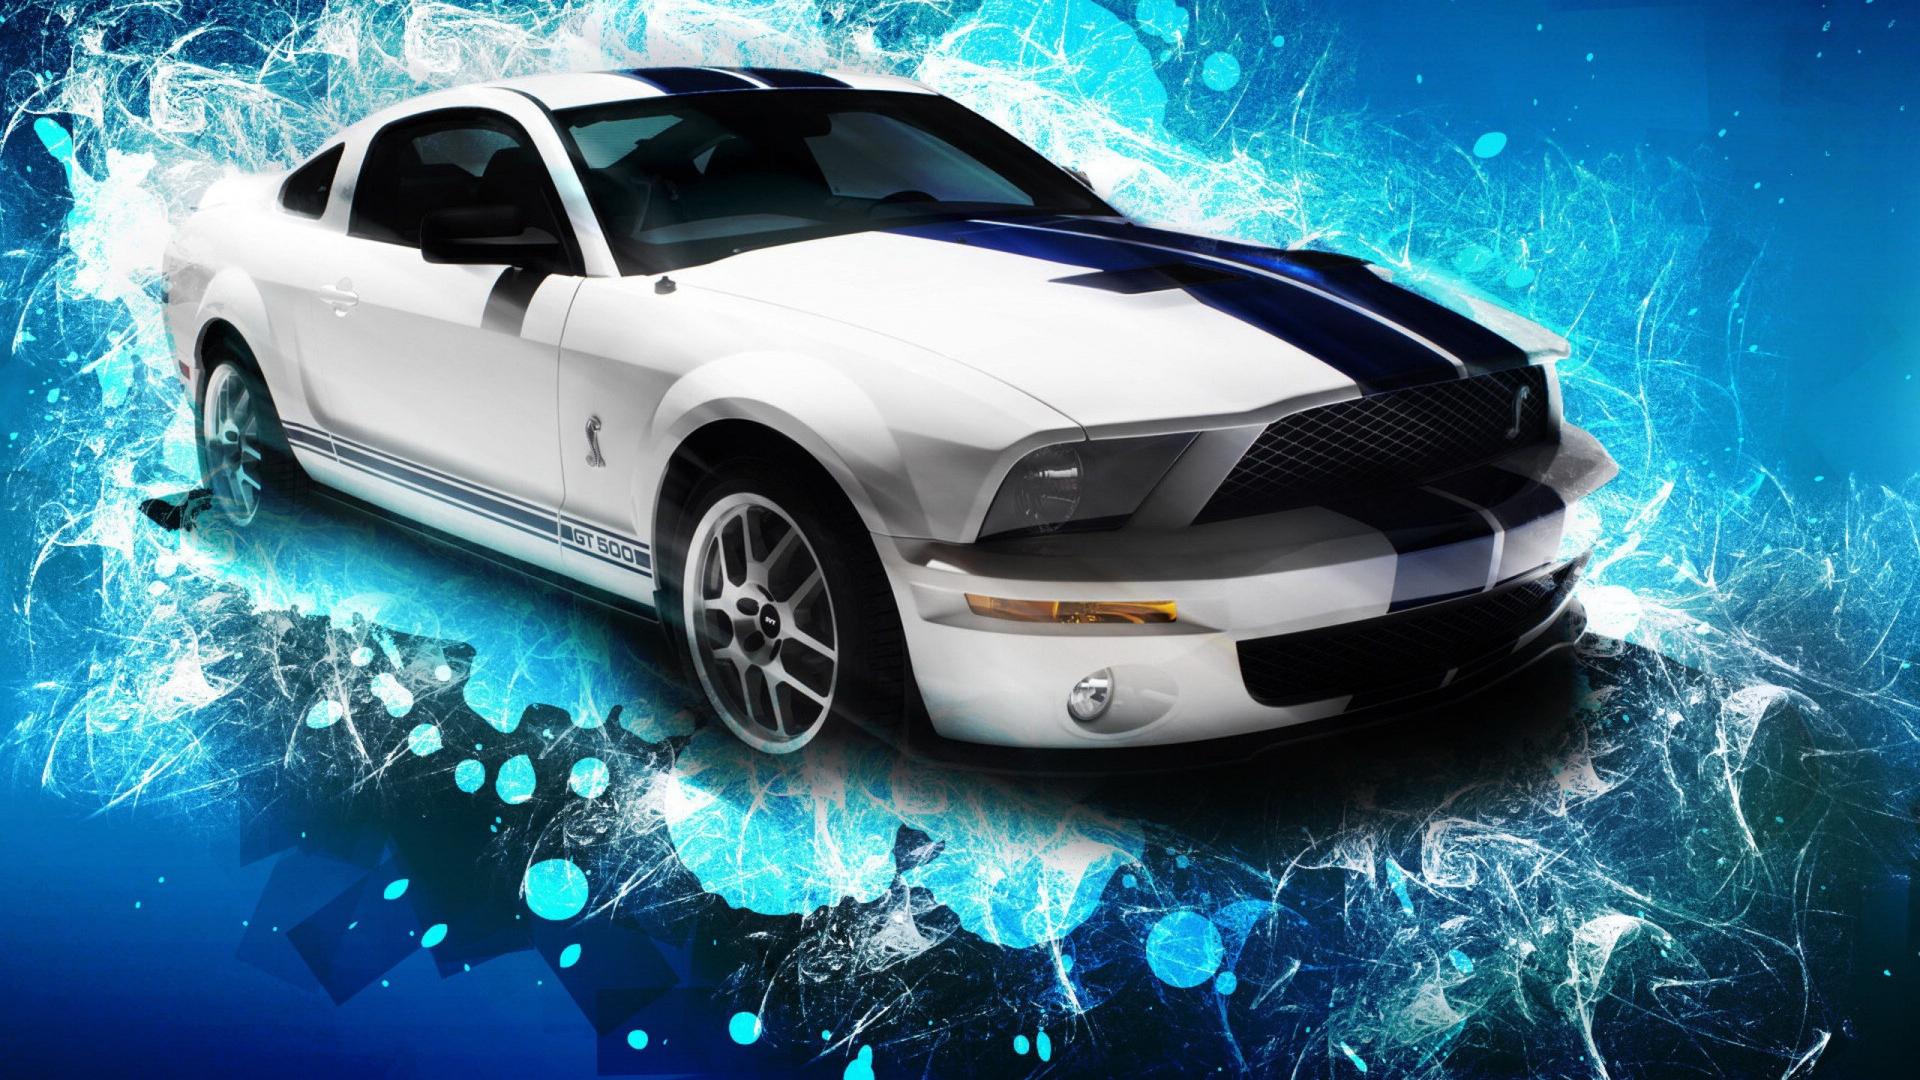 Background Cool Desktop Car Wallpaper Image Mustang Cobra